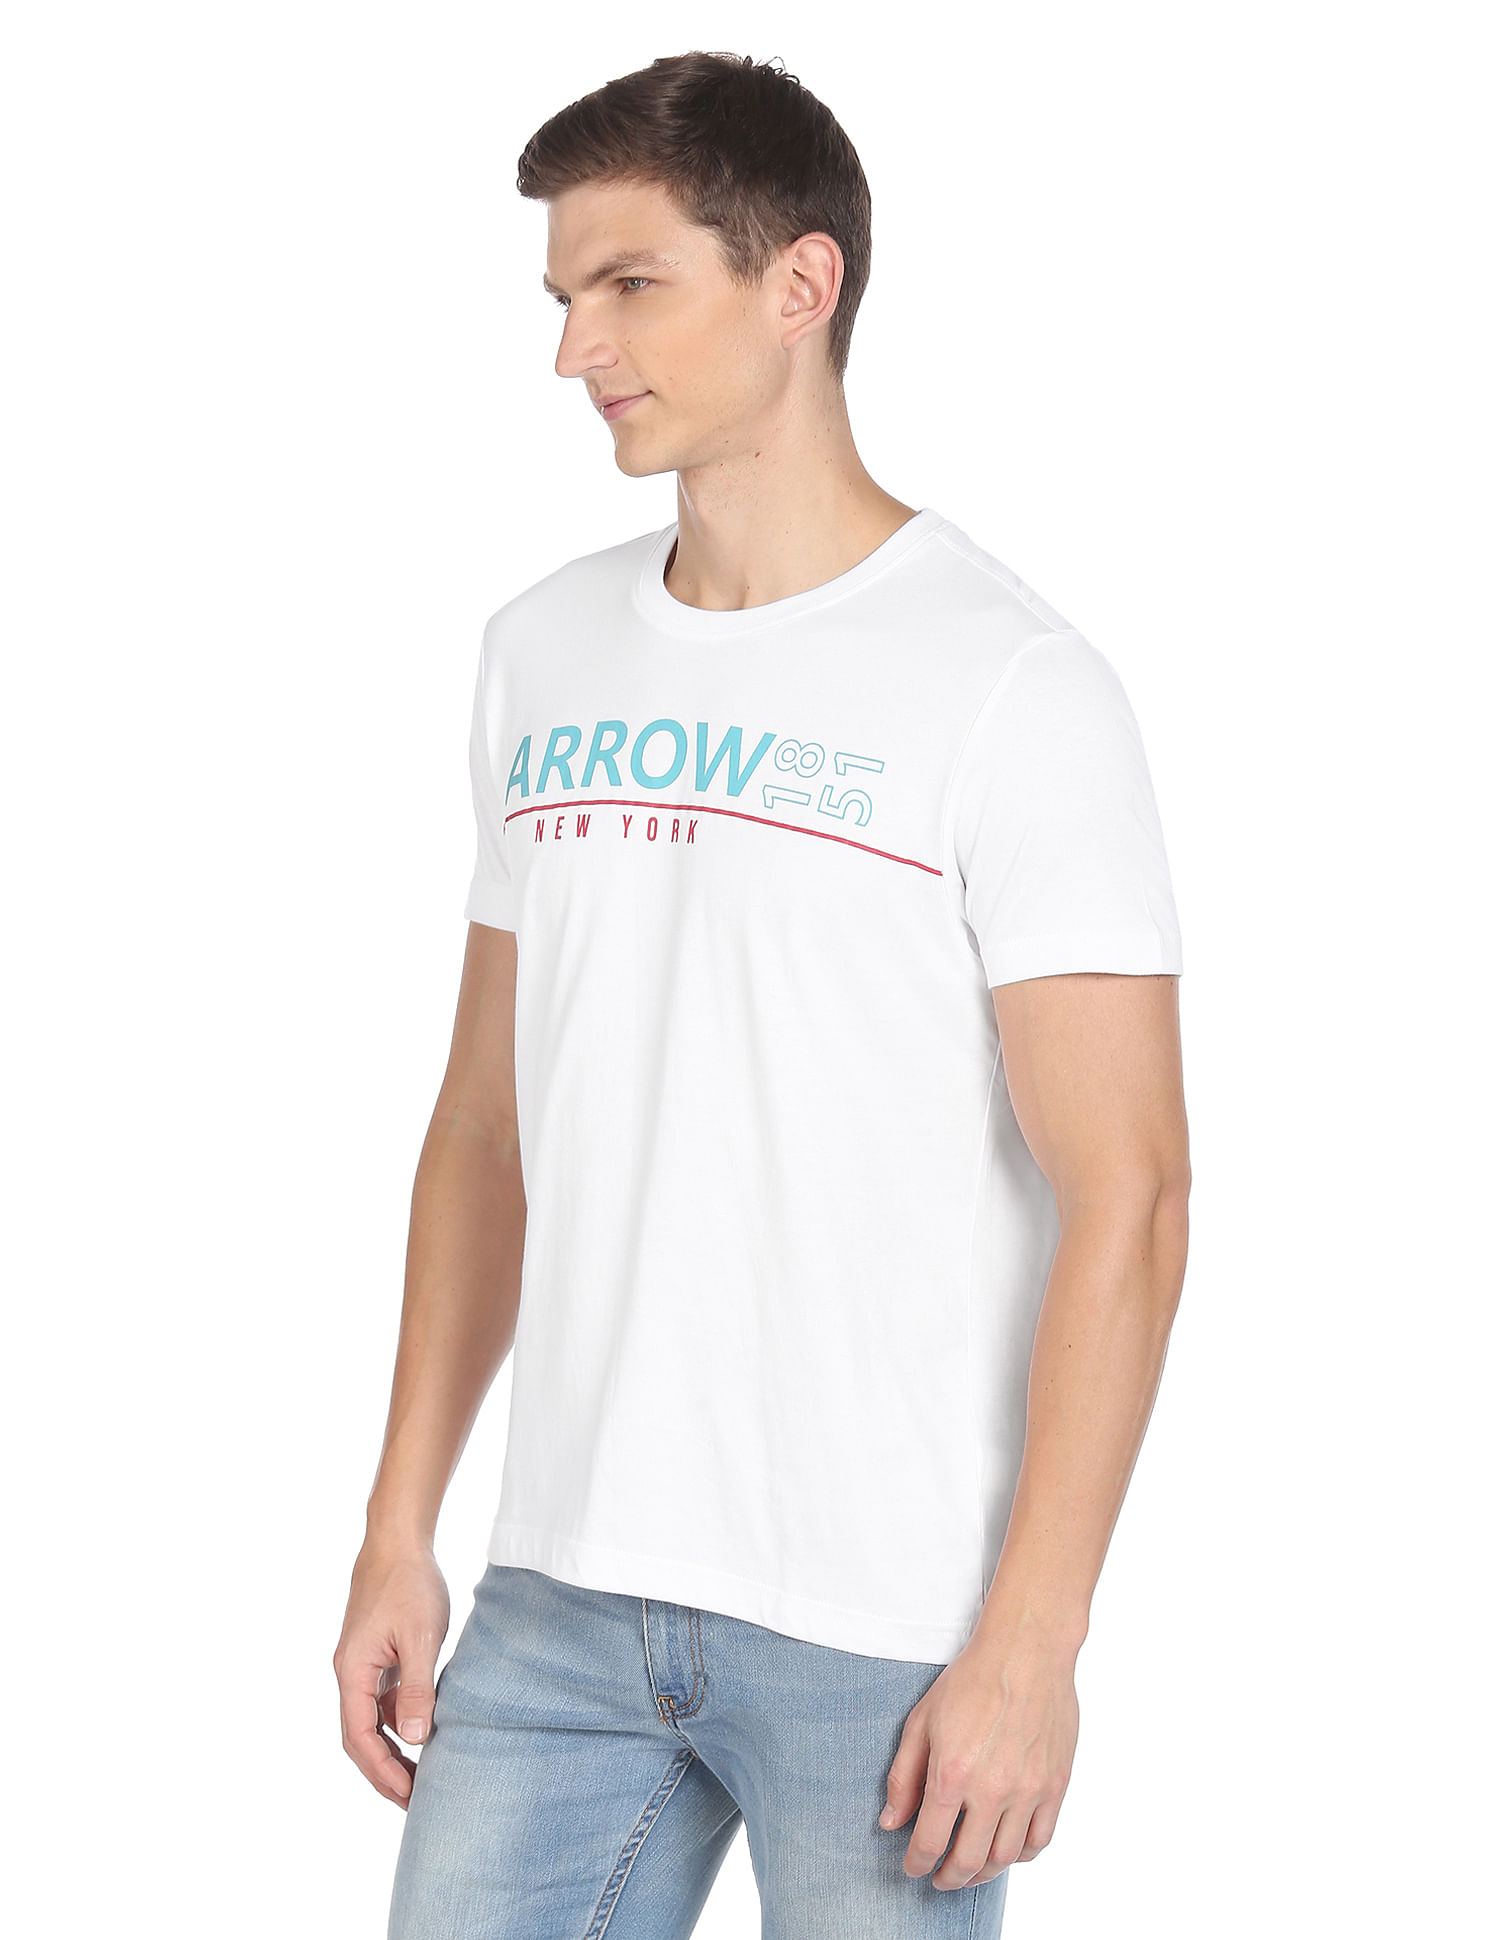 Buy Arrow Sports Cotton Pure Brand T-Shirt Print Men White